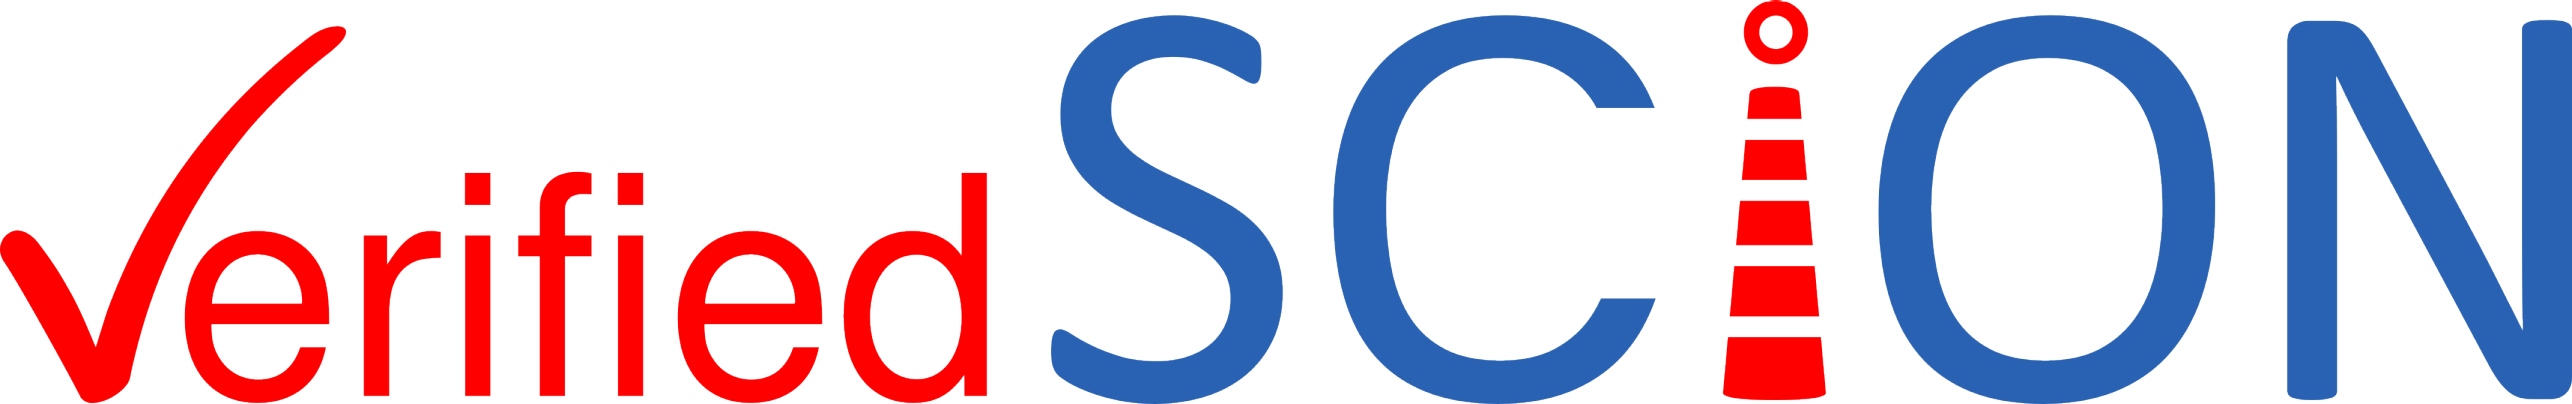 verifiedSCION logo